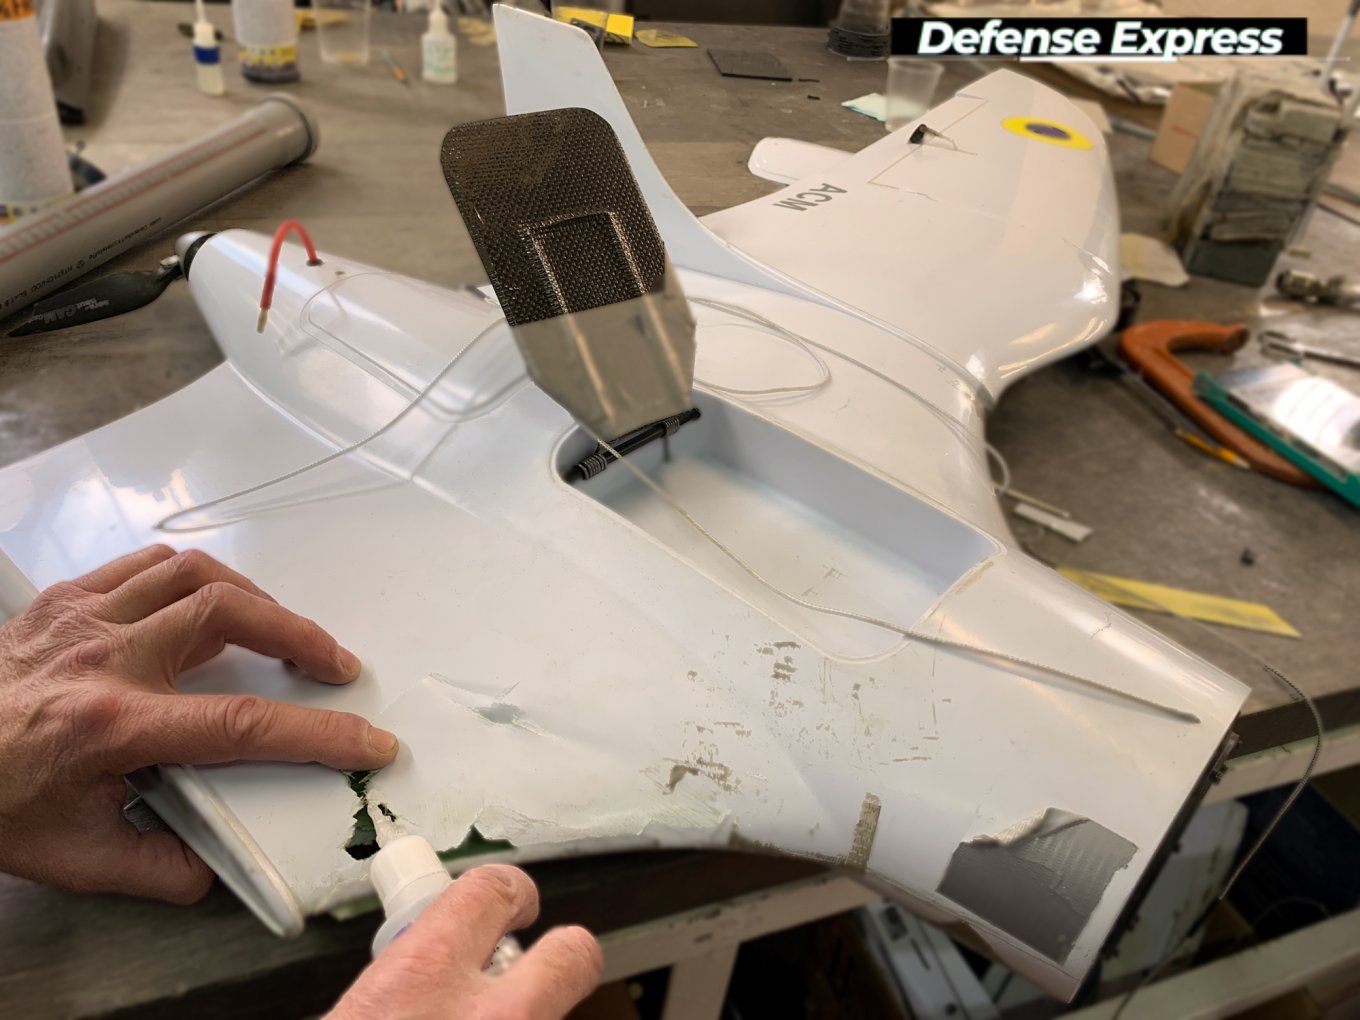 Athlon Avia Furia drone in repairs